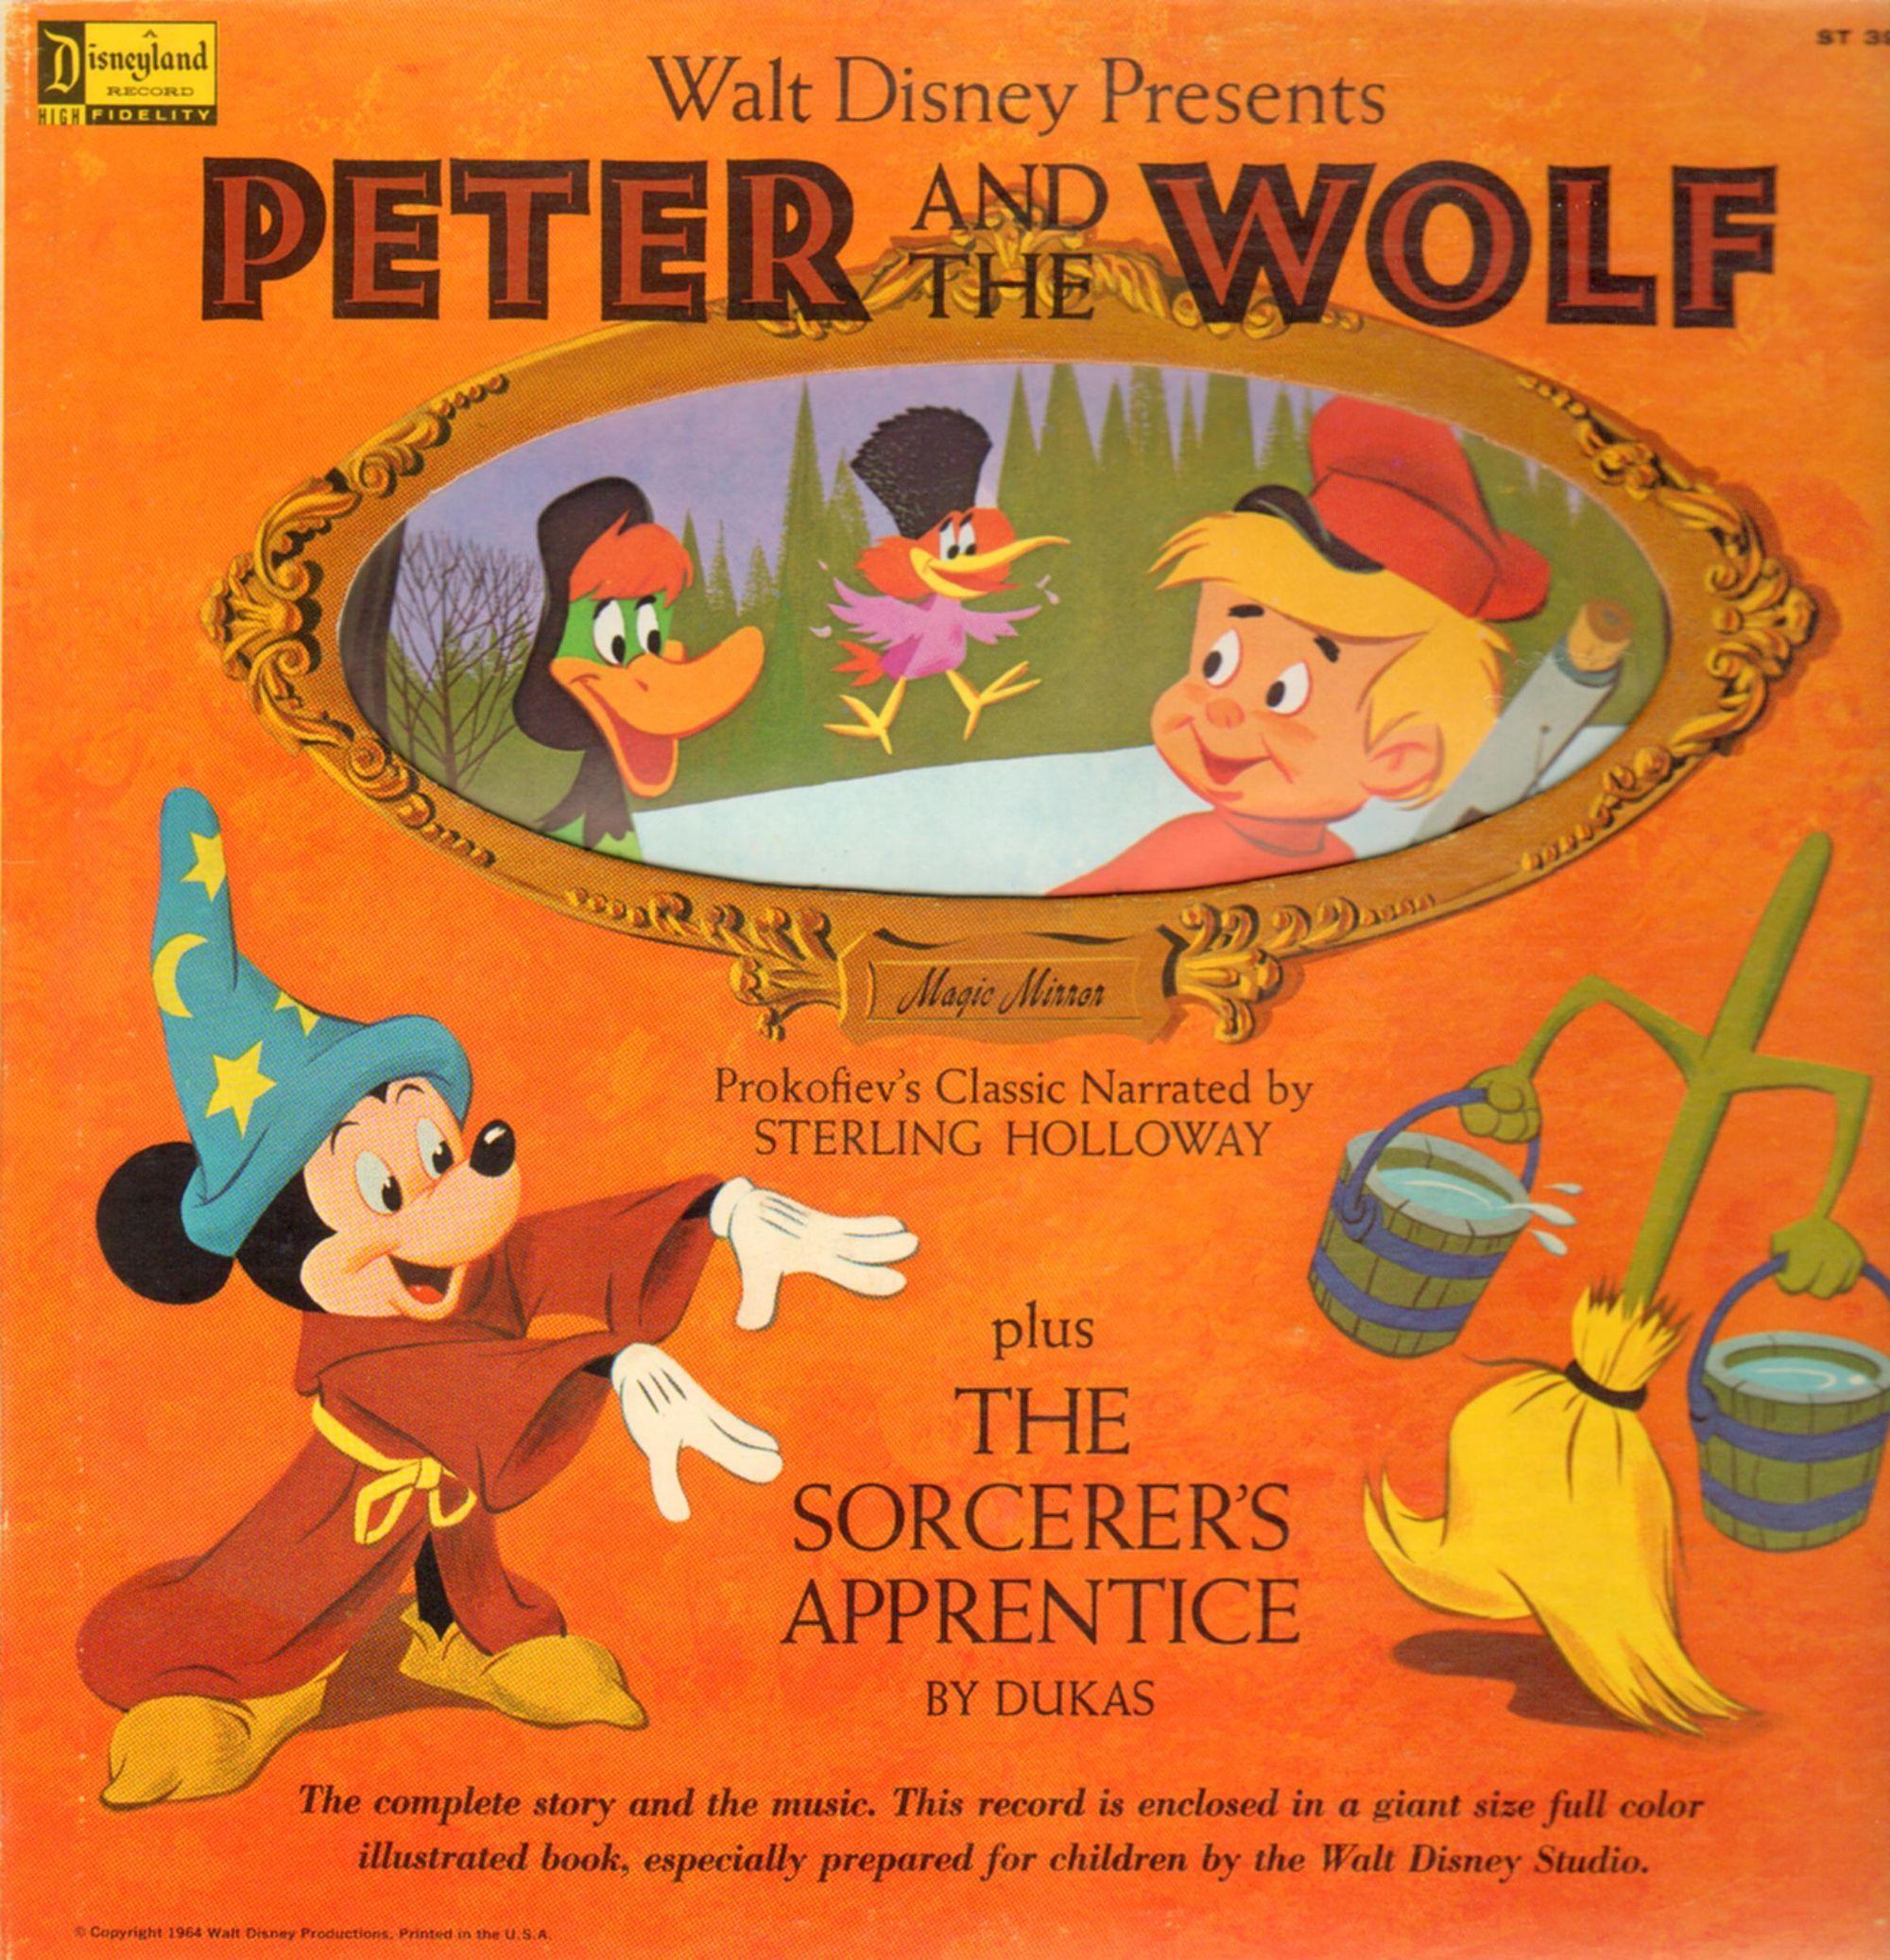 Disneyland Walt Disney Presents Logo - Walt Disney Presents Peter and the Wolf plus The Sorcerer's